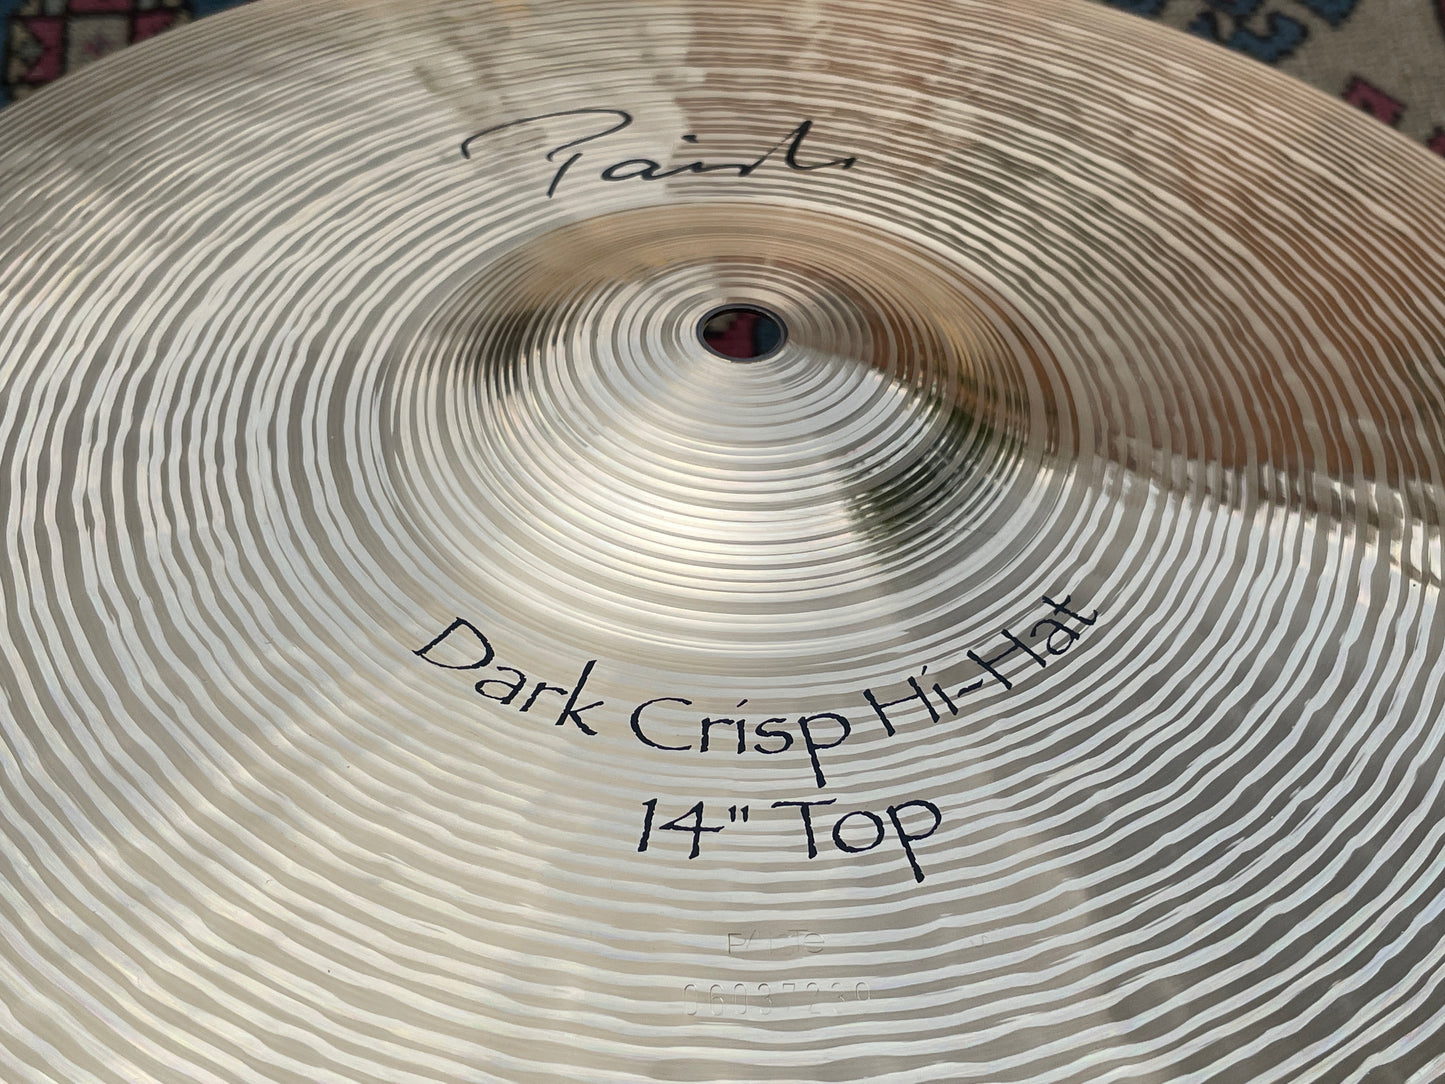 14" Paiste Signature Dark Crisp Cymbal Hi-Hat Cymbal Pair 884g/1478g